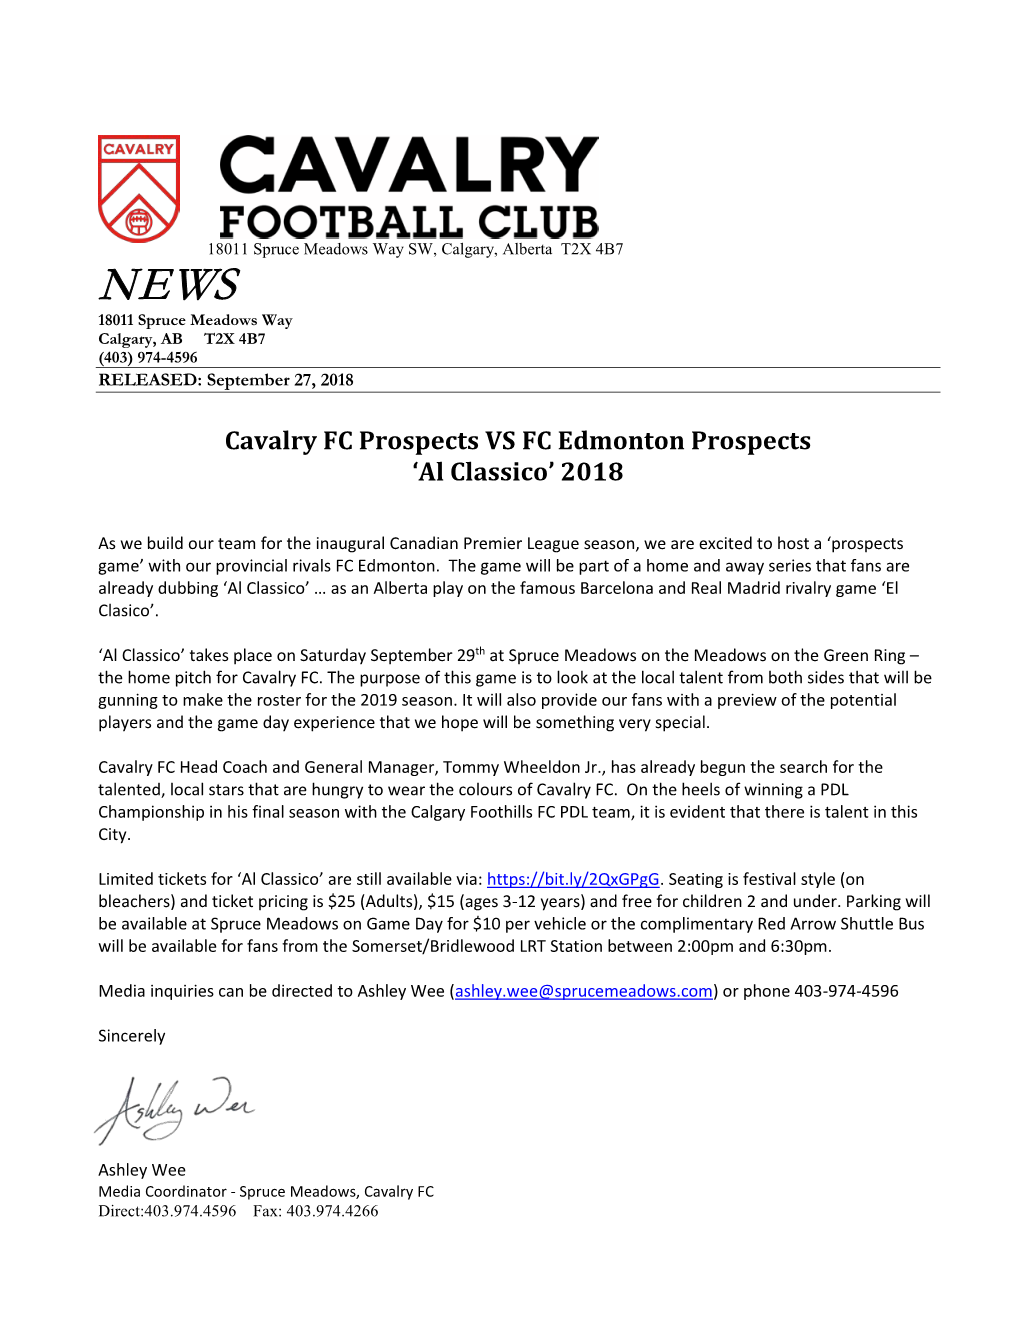 Cavalry FC Prospects VS FC Edmonton Prospects ‘Al Classico’ 2018